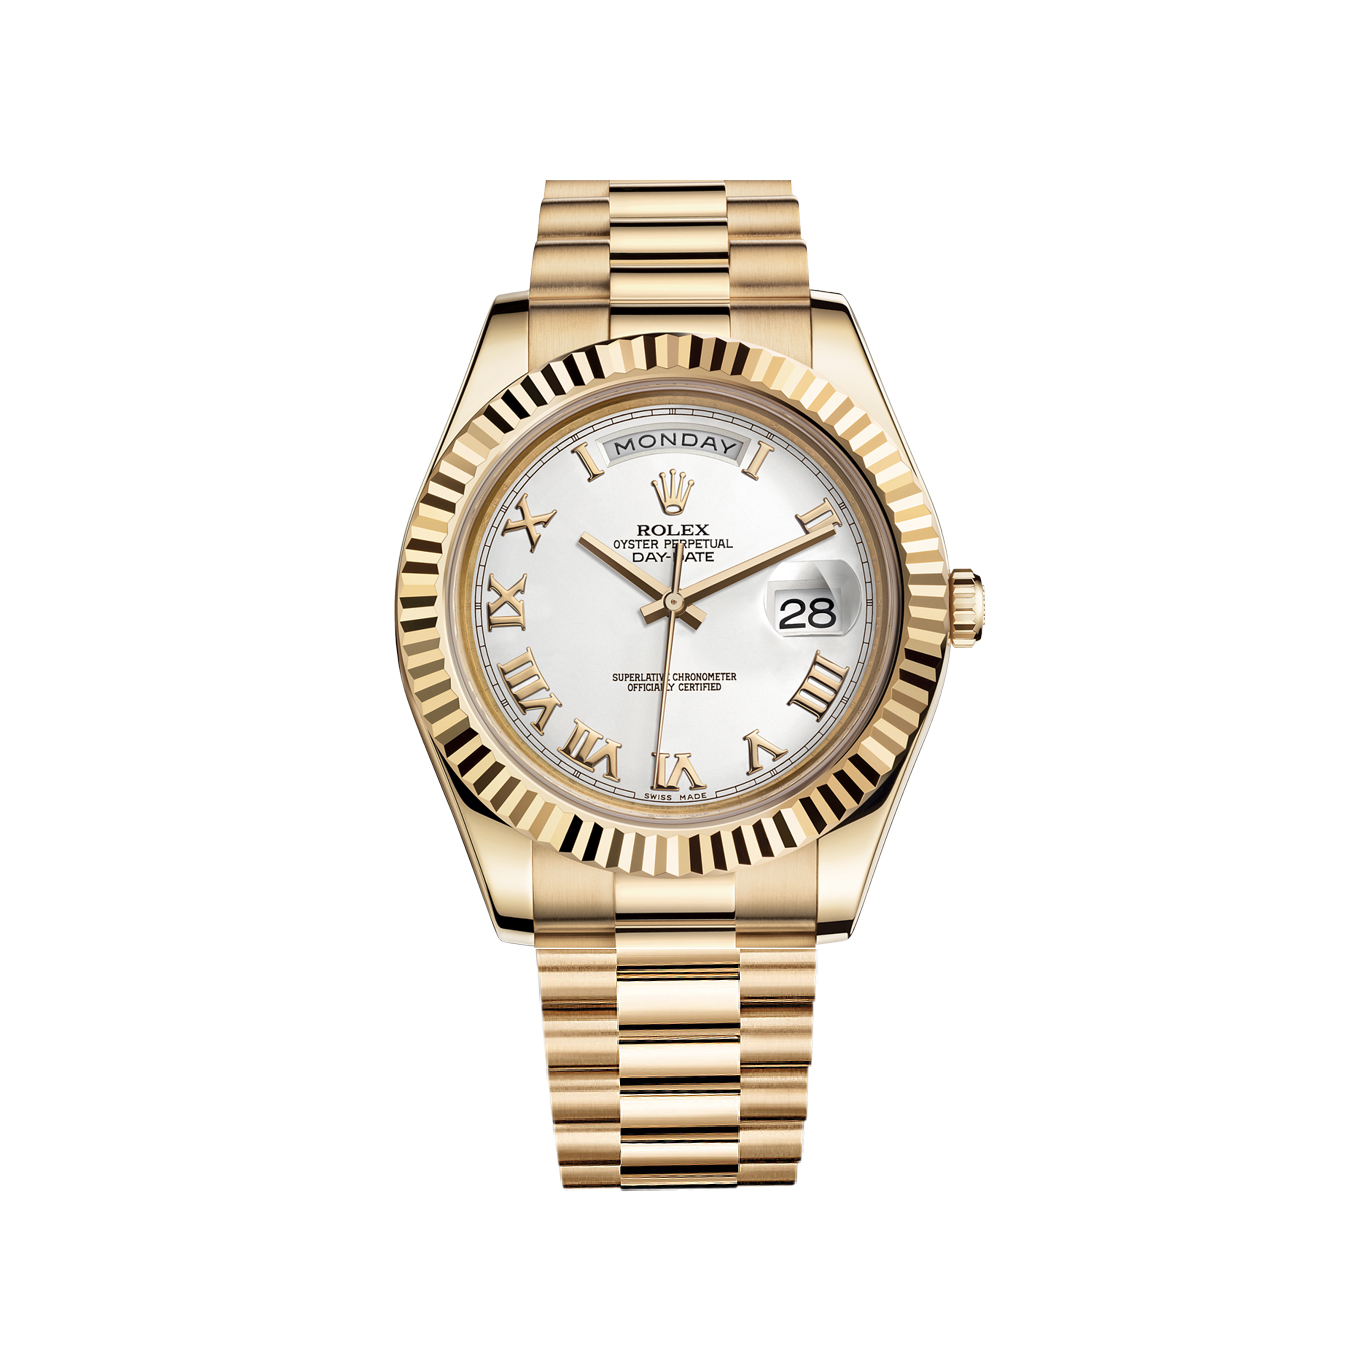 Day-Date II 218238 Gold Watch (White)